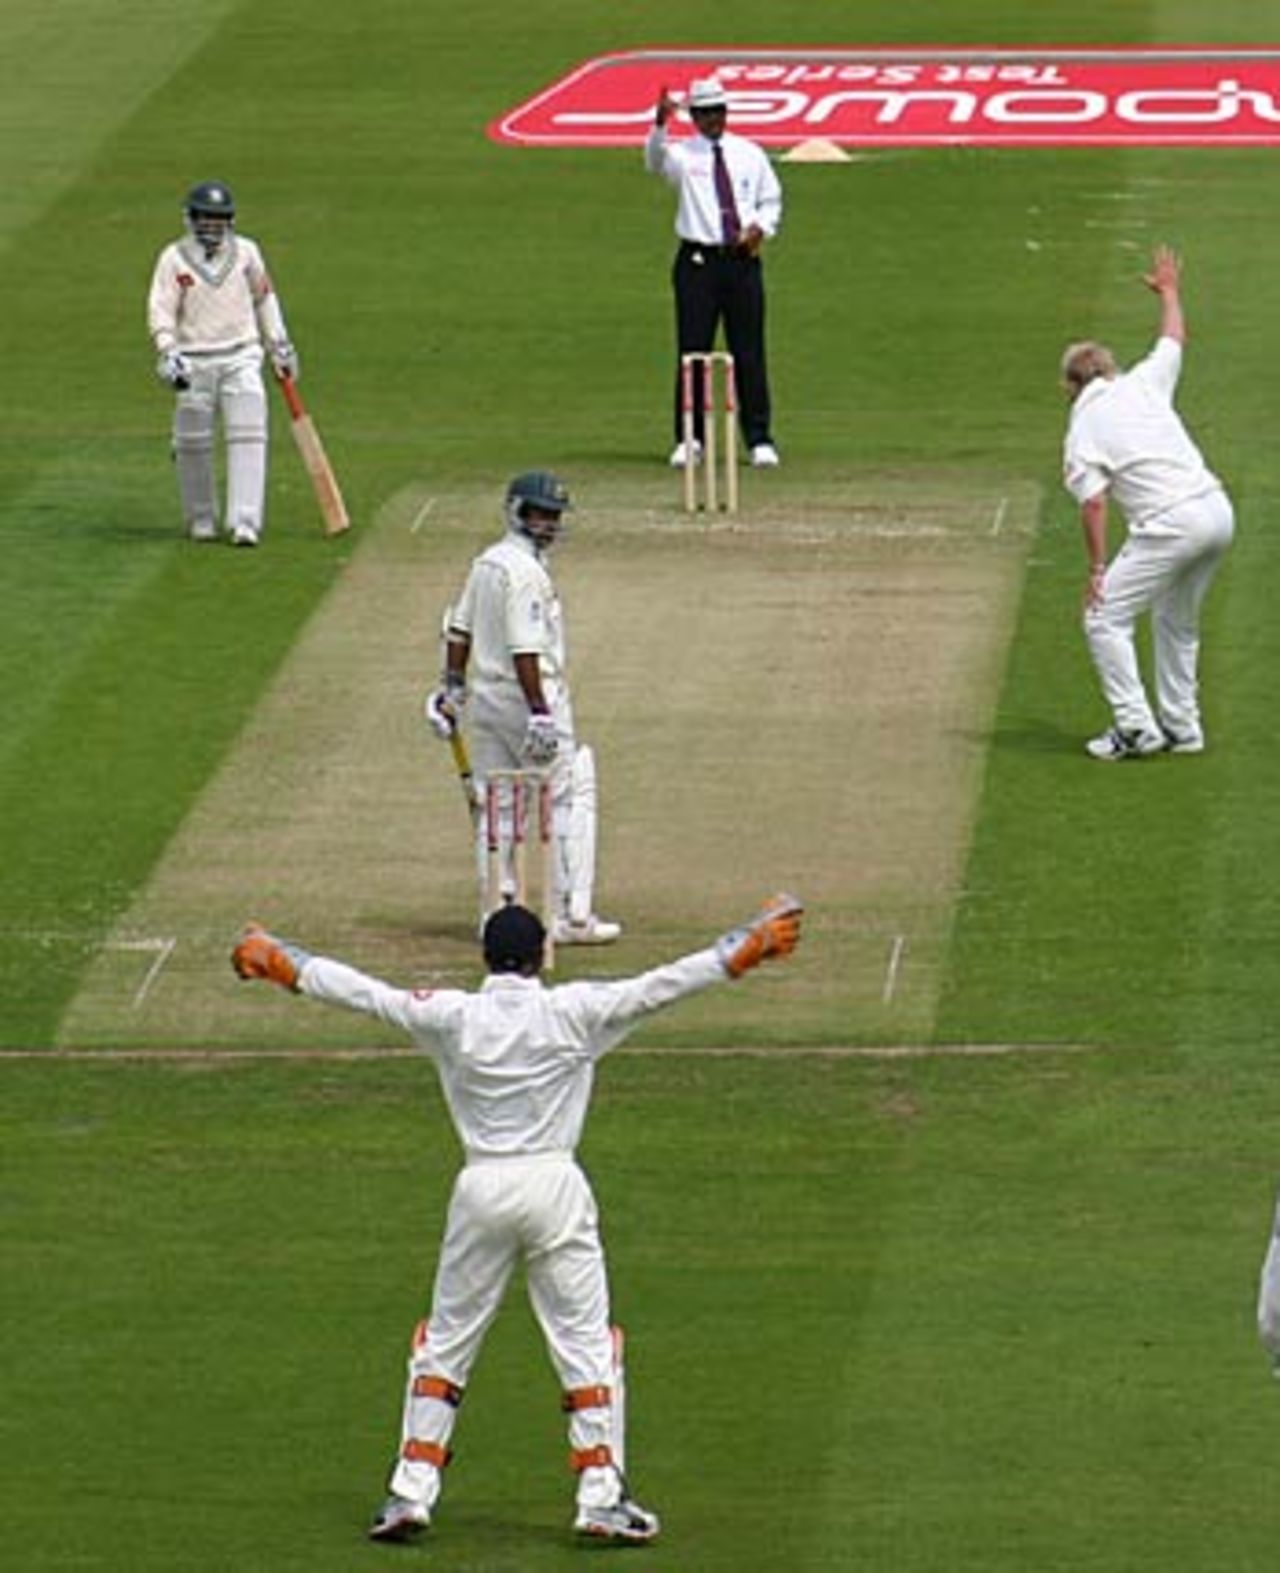 Khaled Mashud is lbw to Matthew Hoggard offering no shot, England v Bangladesh, 1st Test, Lords, May 26